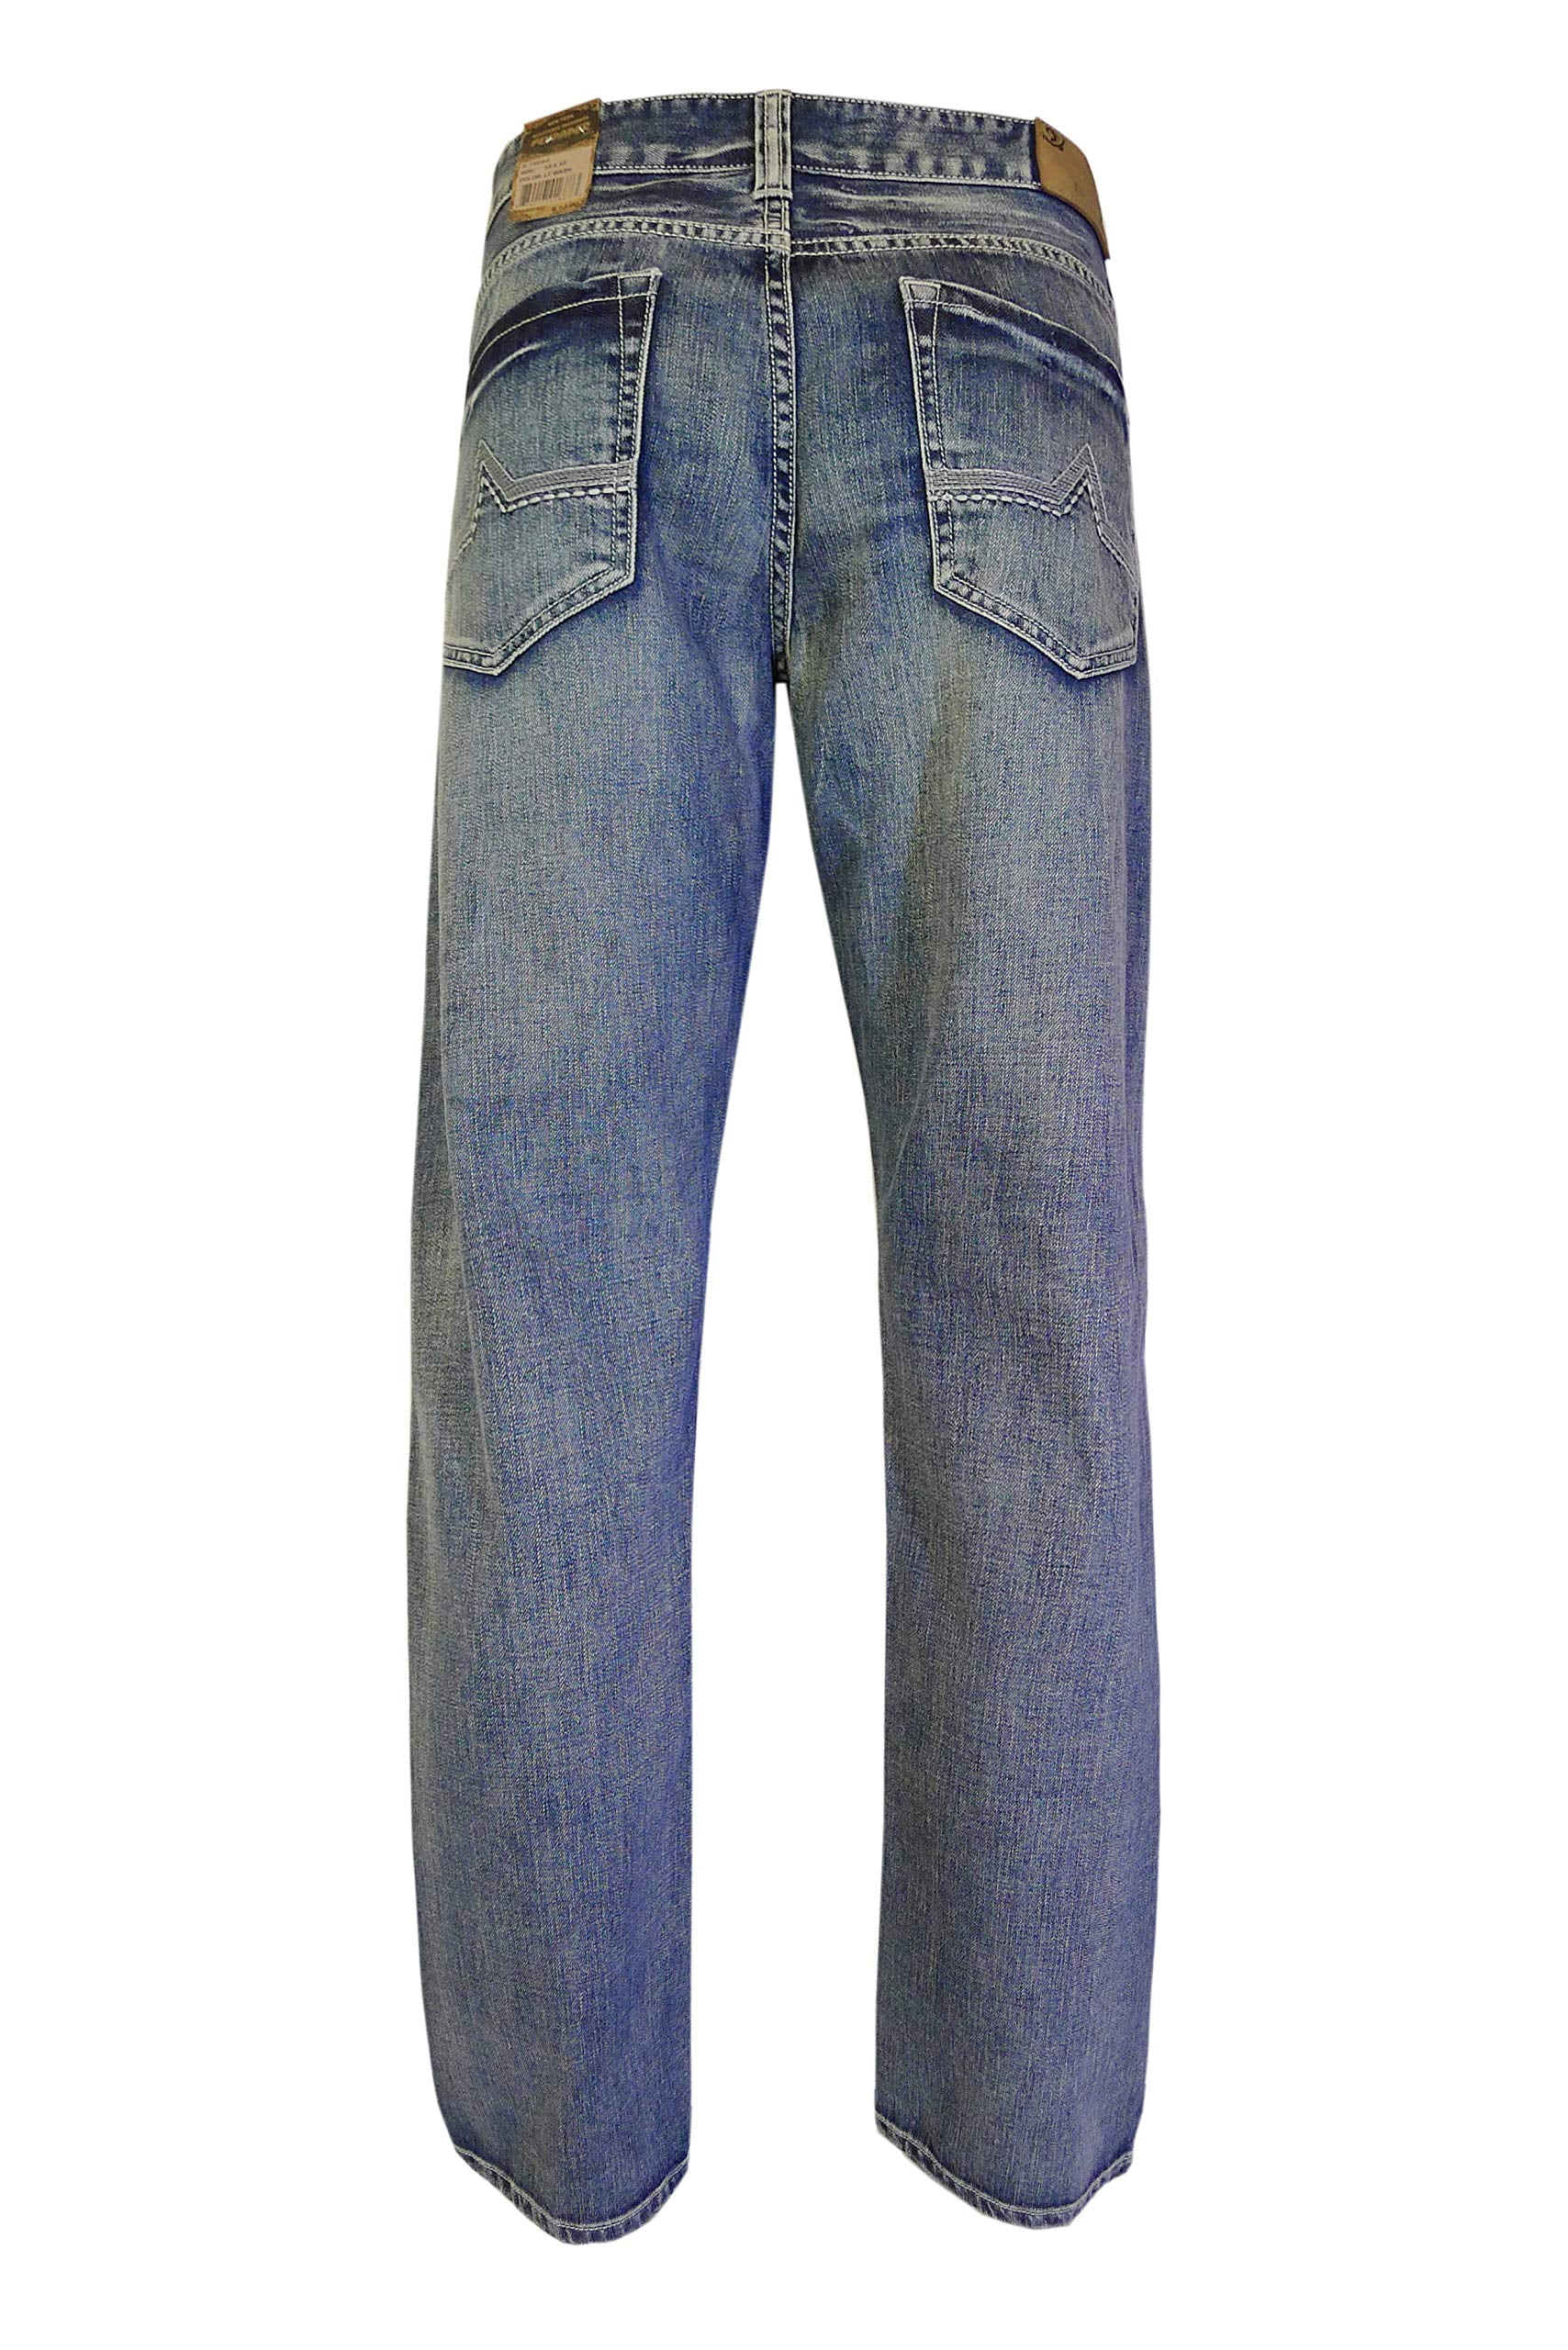 flypaper blue jeans